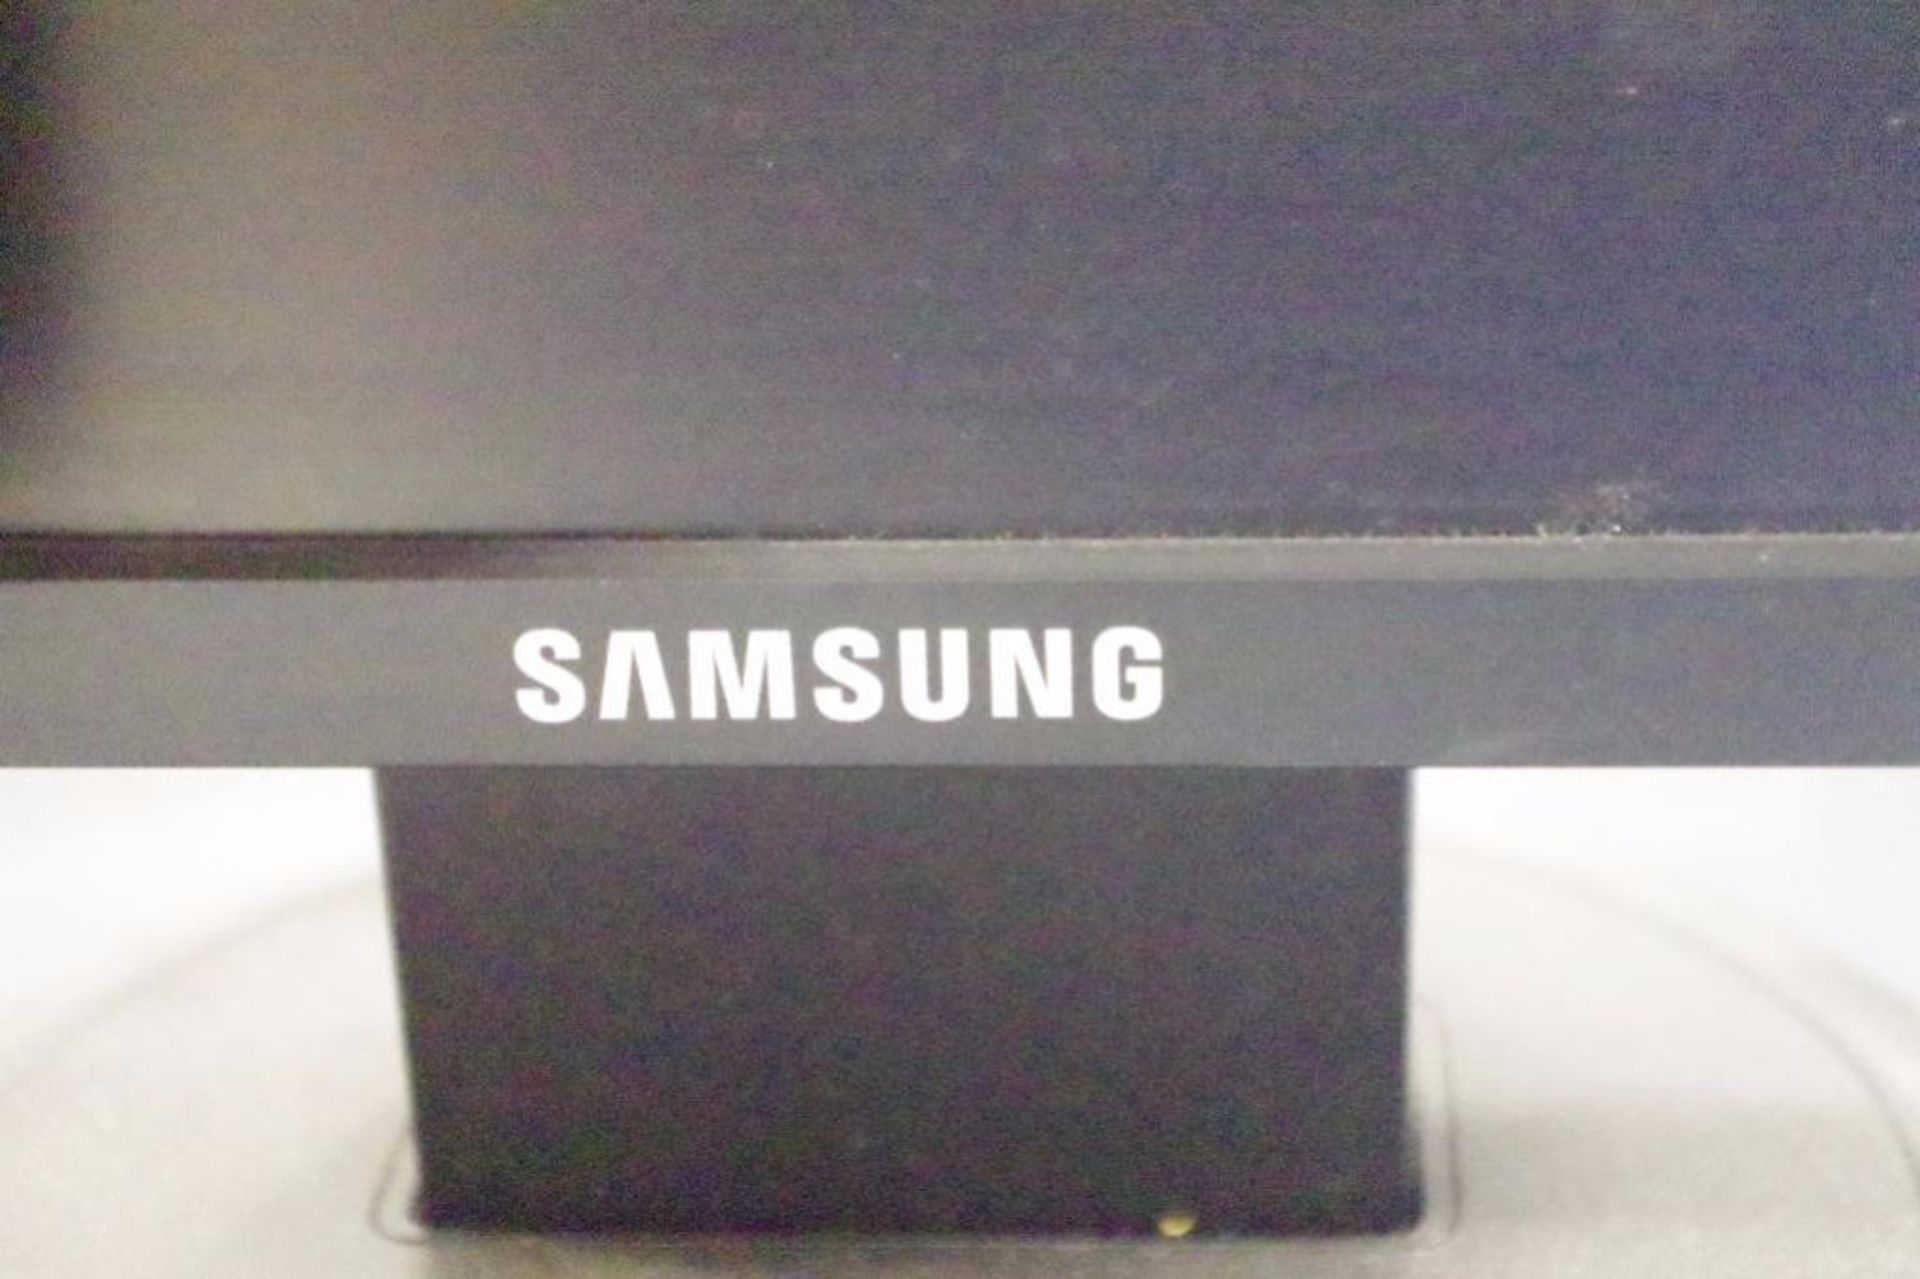 [3] SAMSUNG Syncmaster 19" Flat Screen Computer Monitors, M/N 923NW - Image 2 of 3